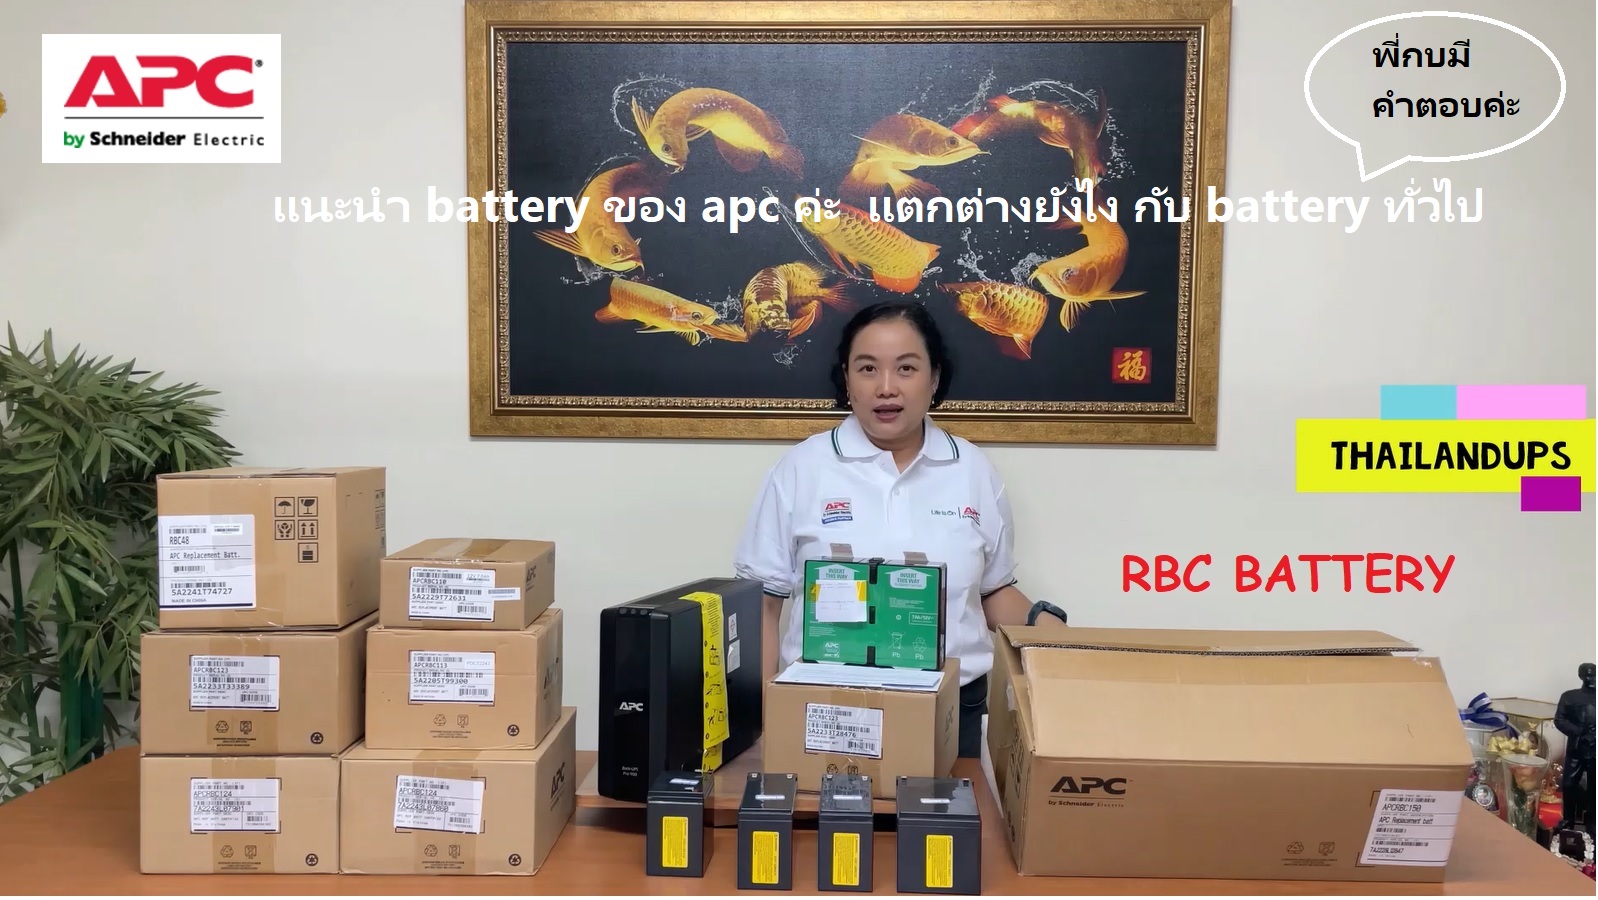 apc battery จะเป็น RBC battery มีหลายรุ่น แล้วแต่รุ่นของเครื่องสำรองไฟ